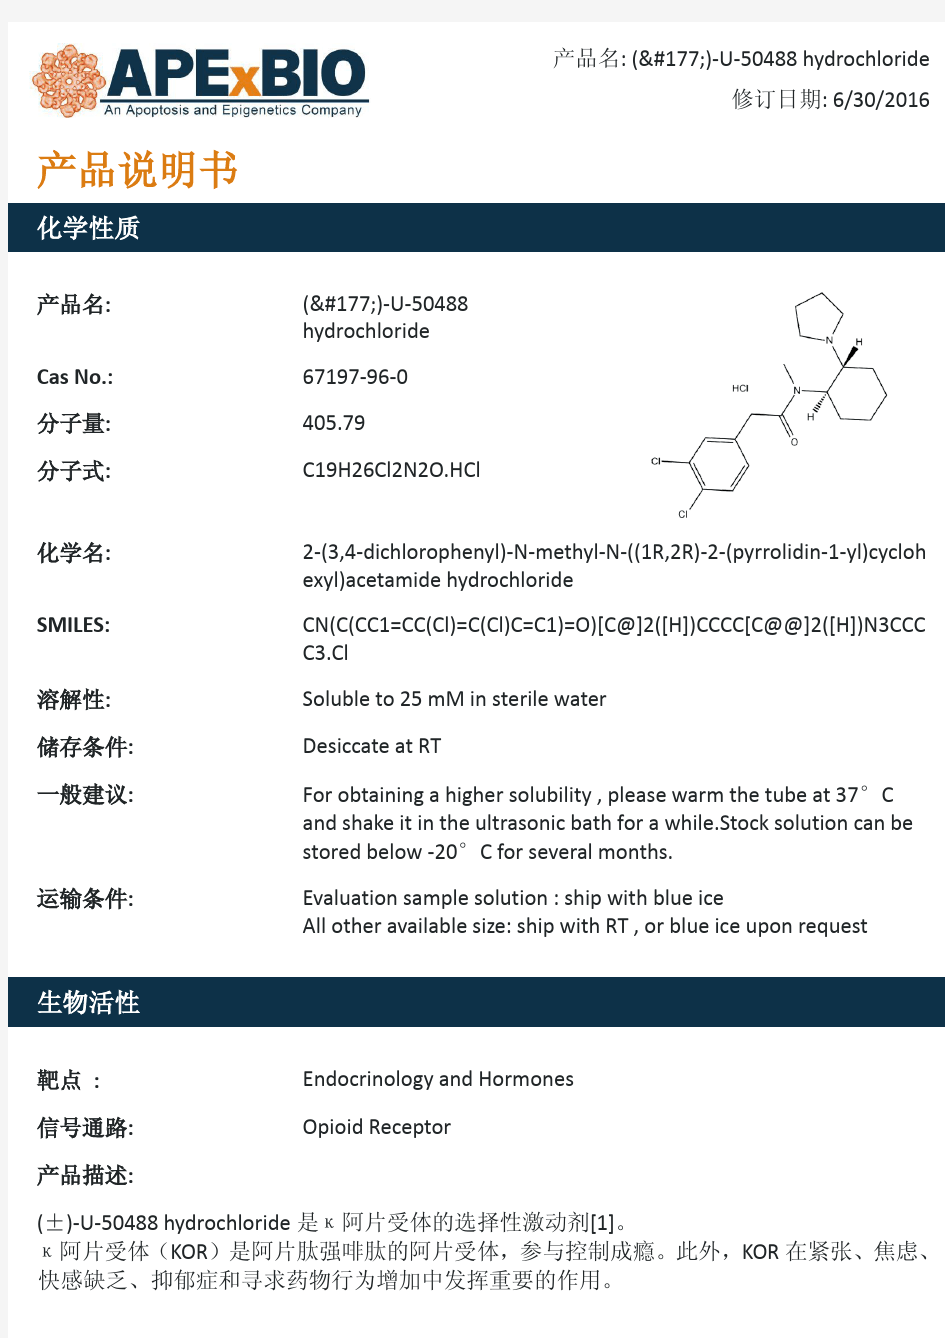 (±)-U-50488 hydrochloride_κ阿片受体的选择性激动剂_67197-96-0_Apexbio